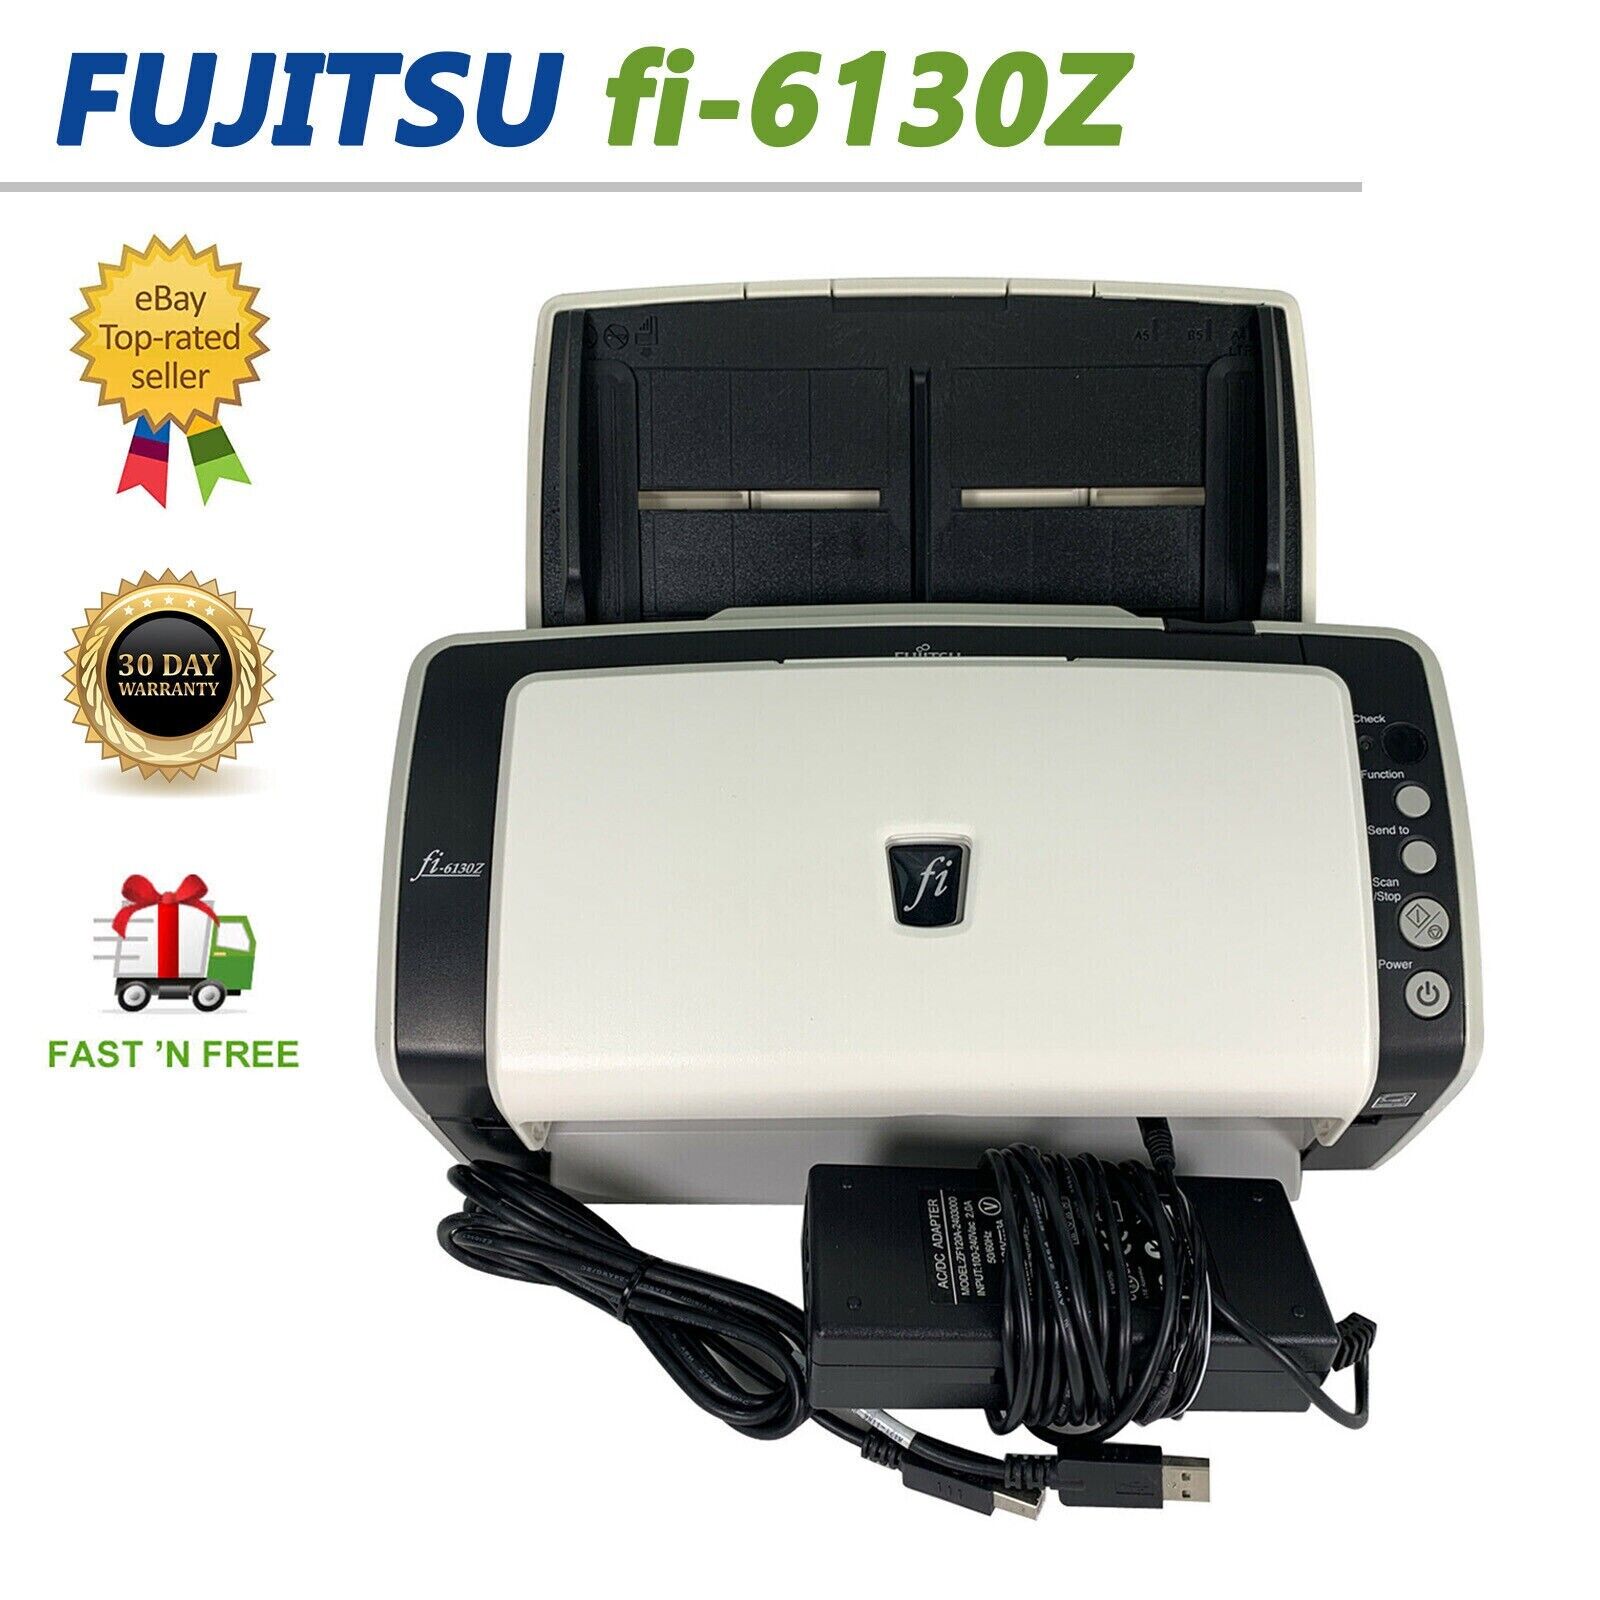 Fujitsu FI-6130Z Duplex Document Color Scanner w/AC Adapter & USB Cable